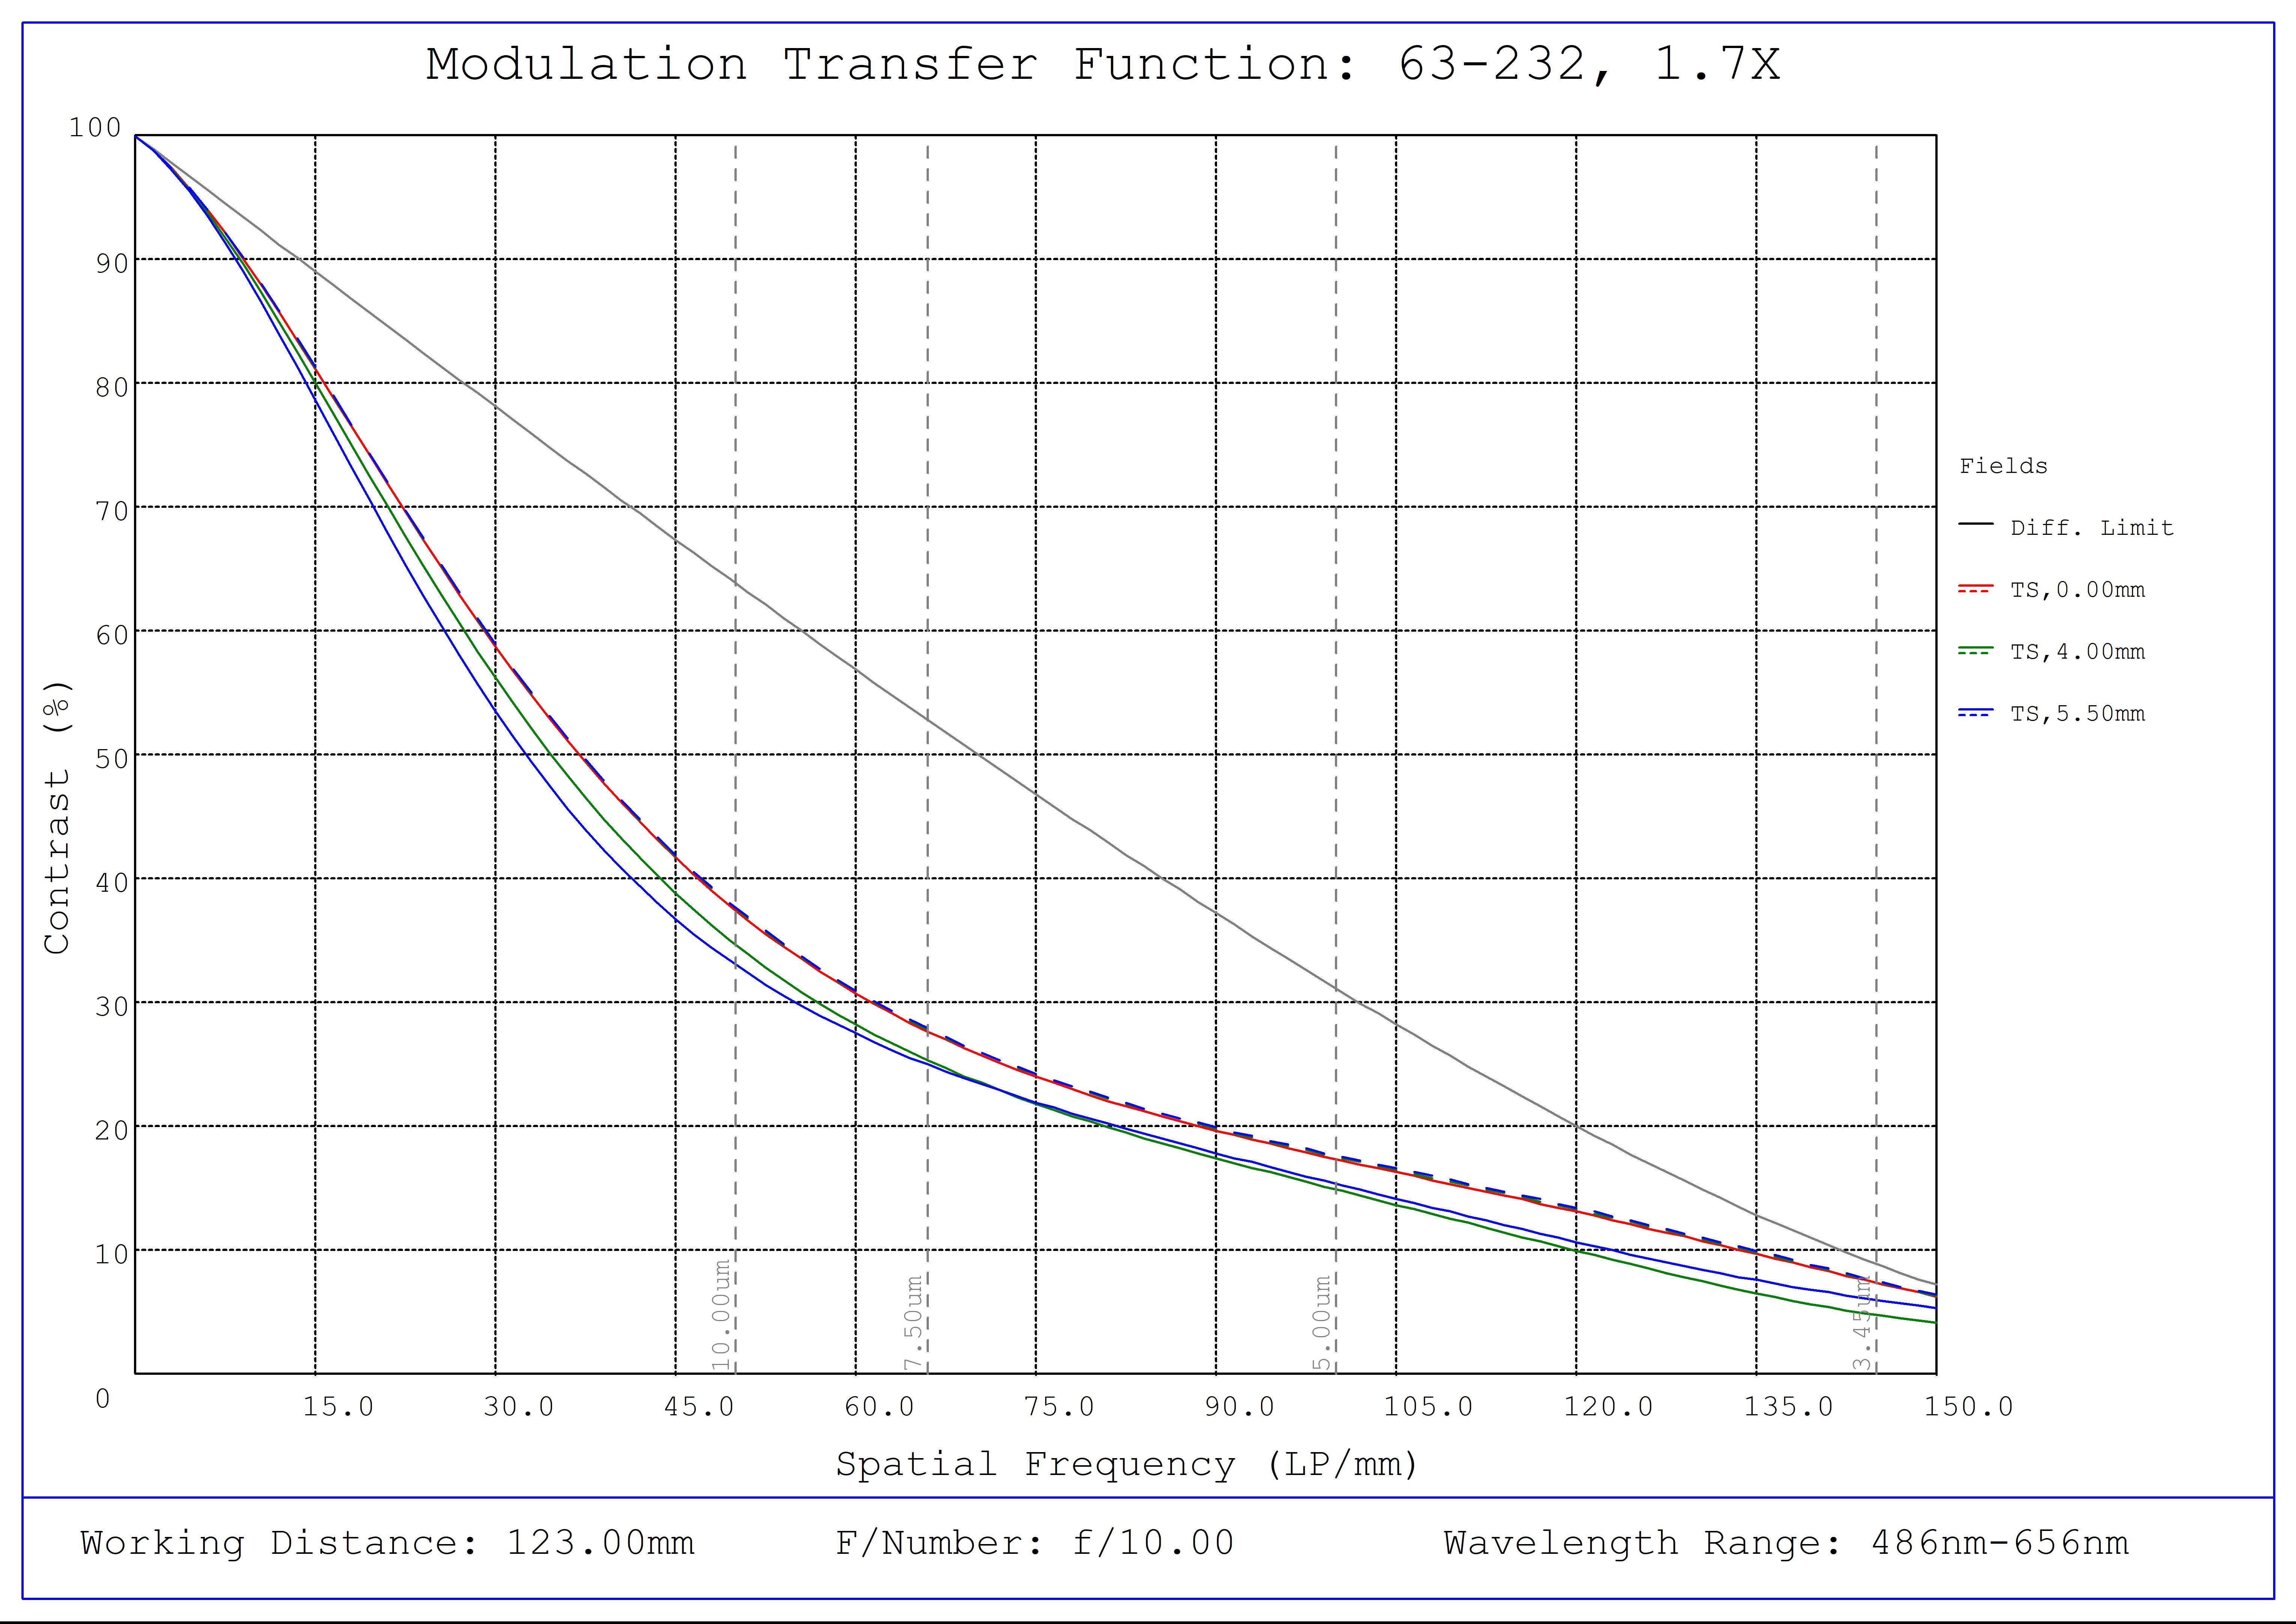 #63-232, 1.7X, 2/3" C-Mount PlatinumTL™ Telecentric Lens, Modulated Transfer Function (MTF) Plot, 123mm Working Distance, f10